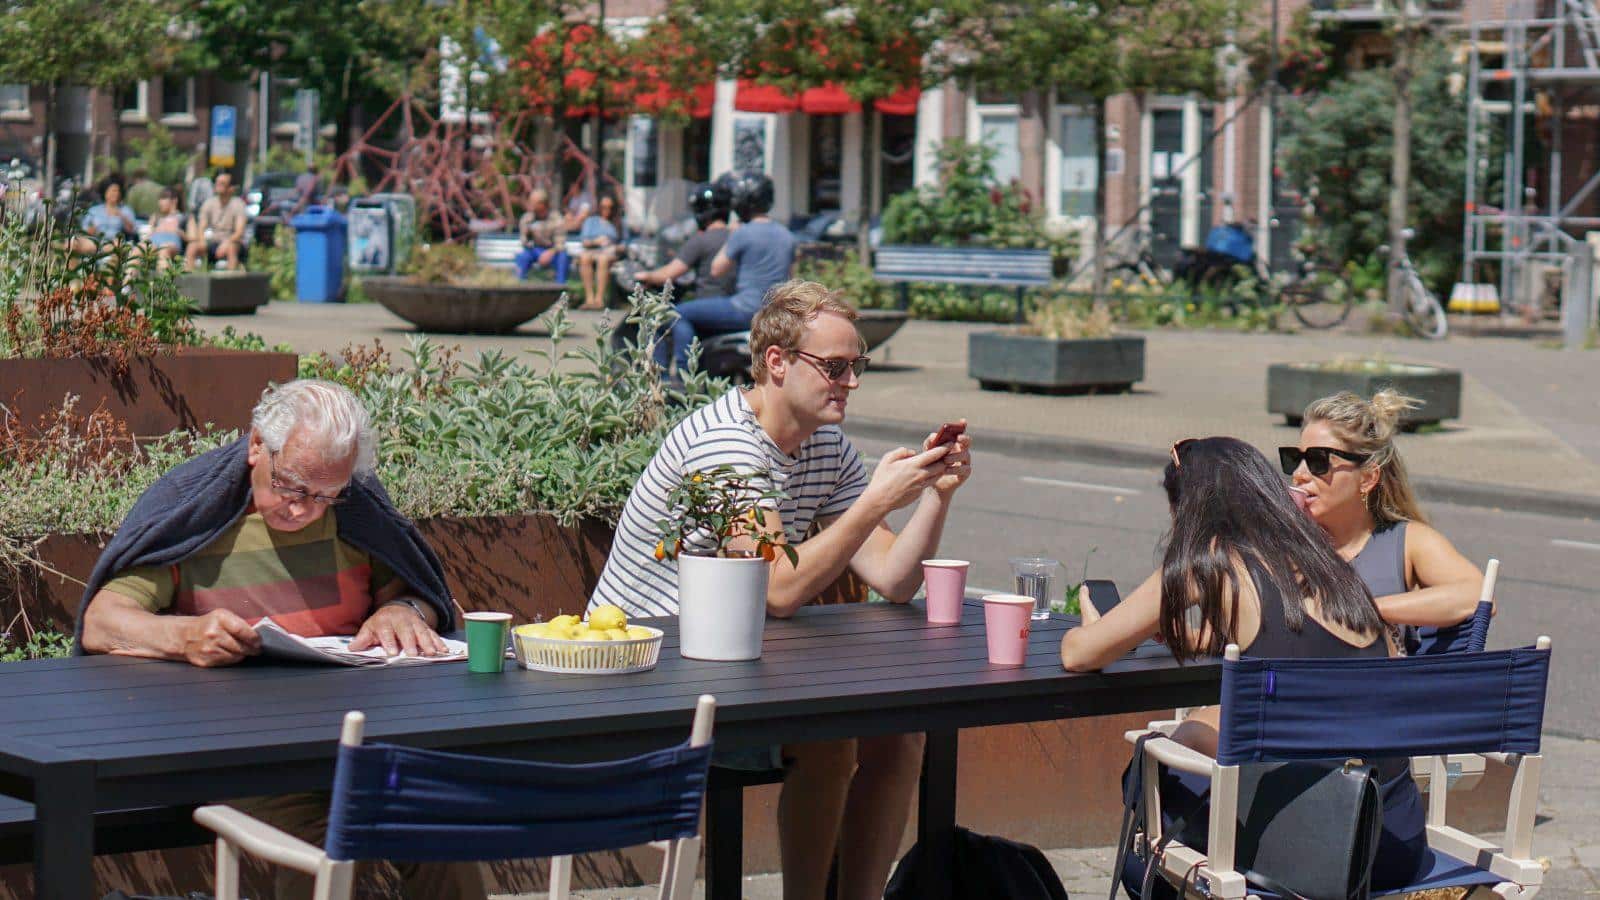 Ikaria_Amsterdam_The_Coffeevine_Review-2 (1)